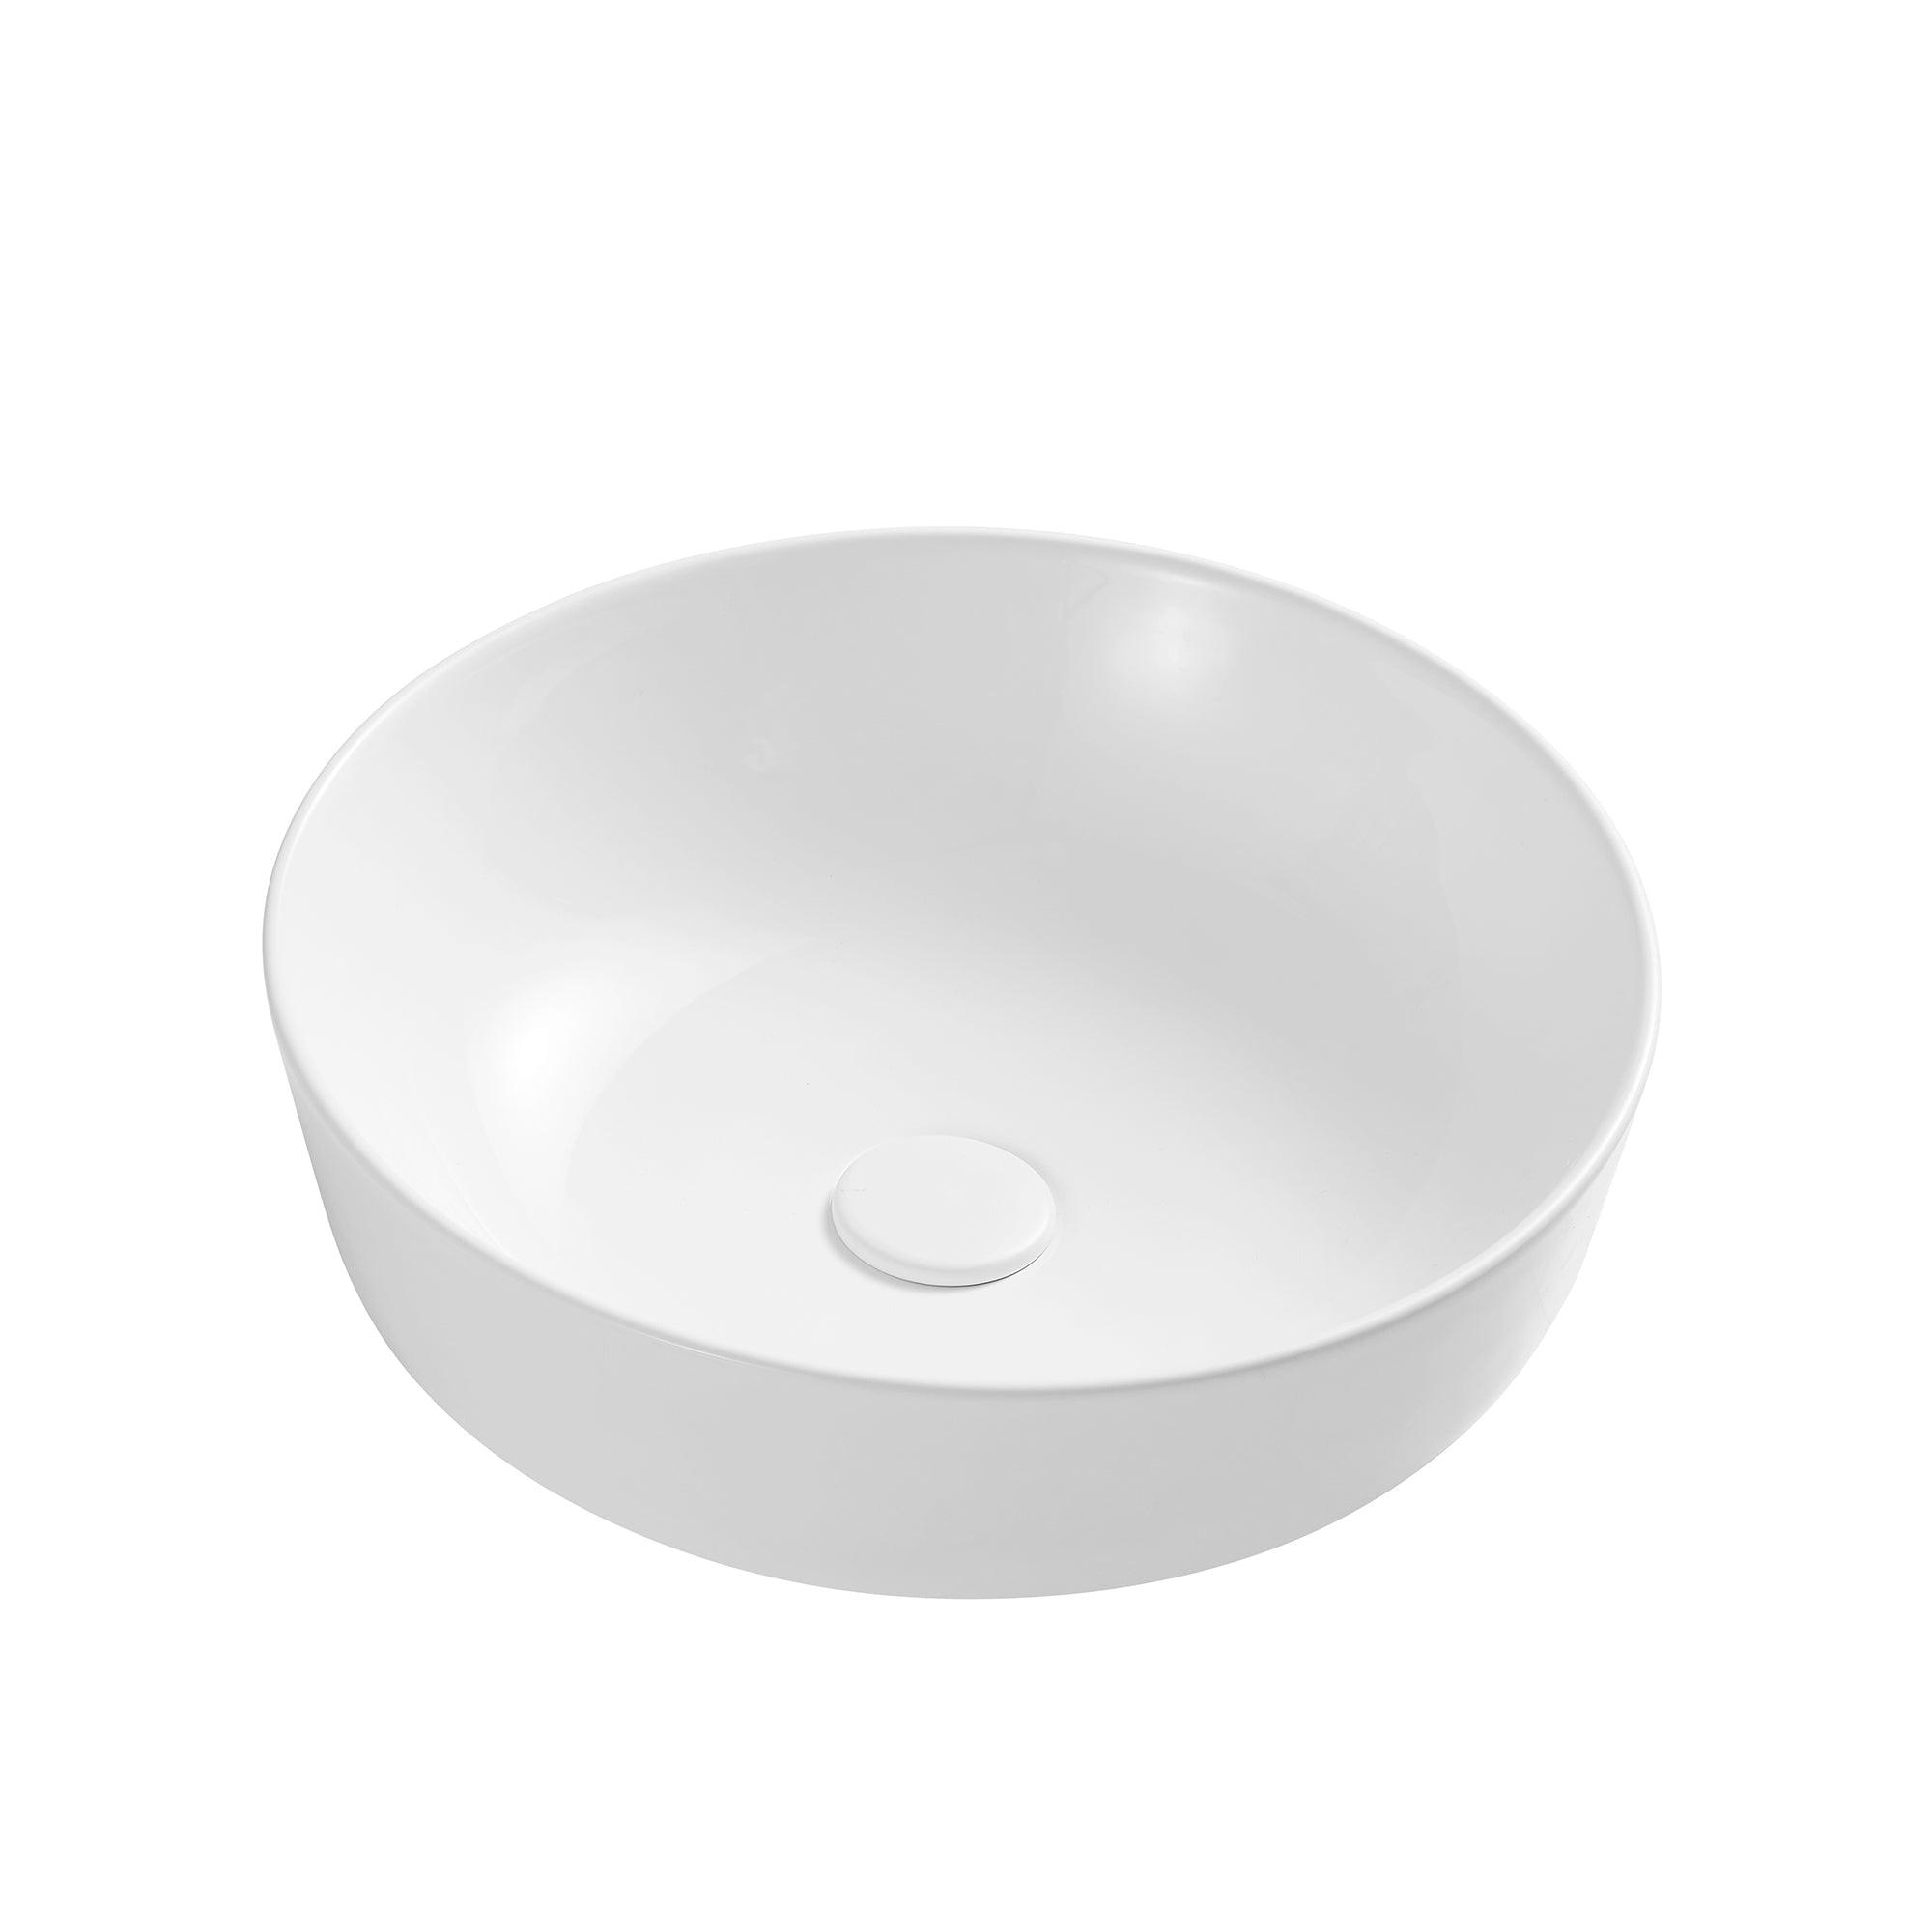 Ceramic round vessel sink Matte White - Hbdepot